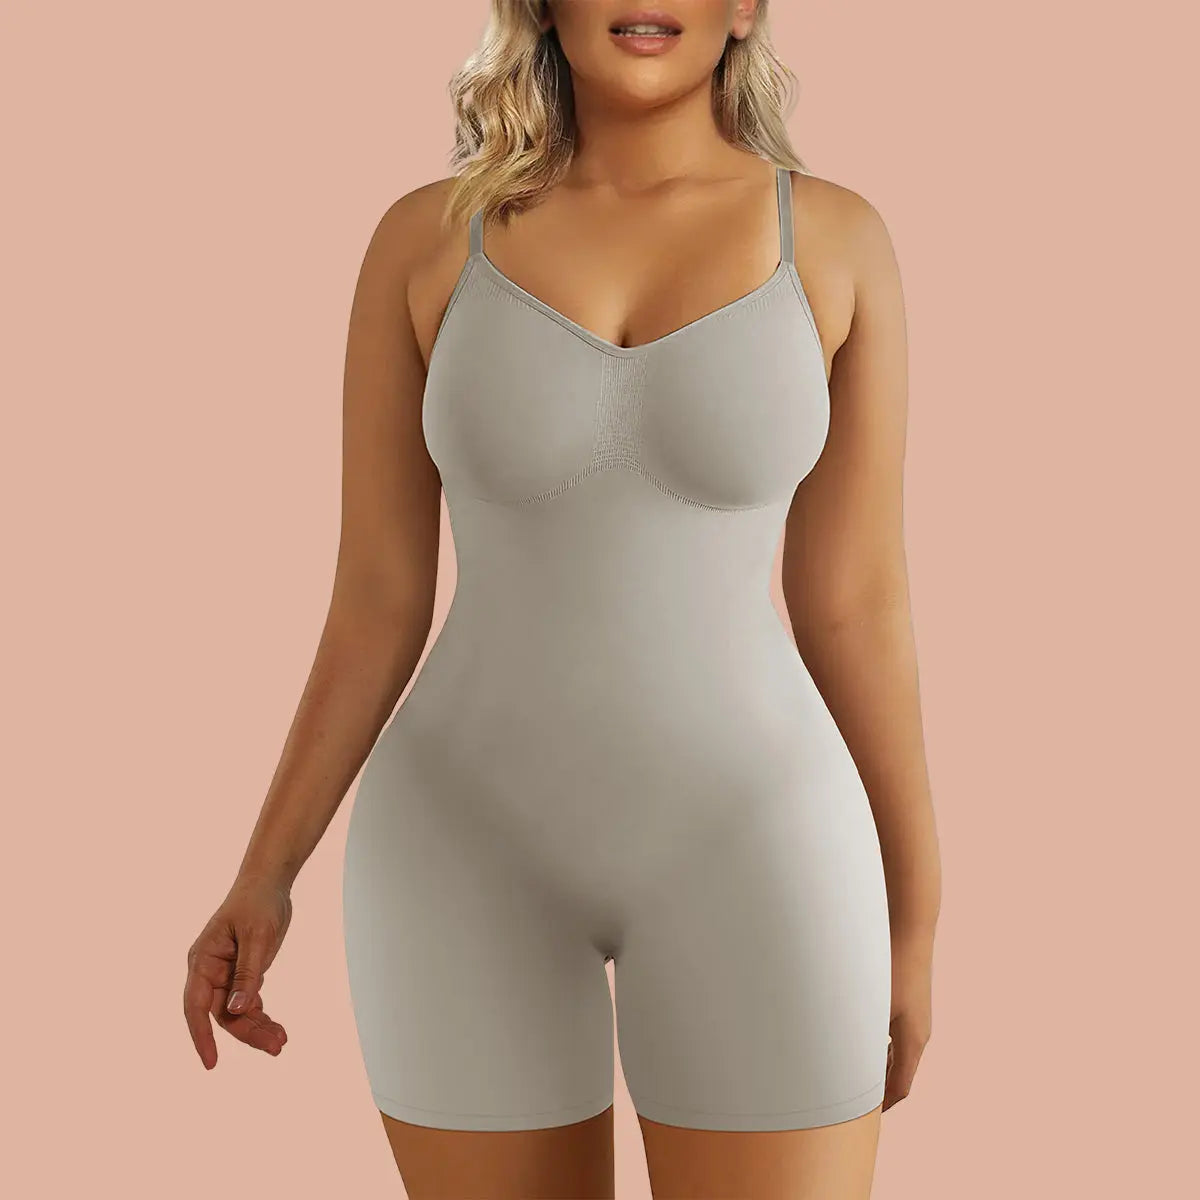 Bodysuit for Women Tummy Control Shapewear Seamless Sculpting